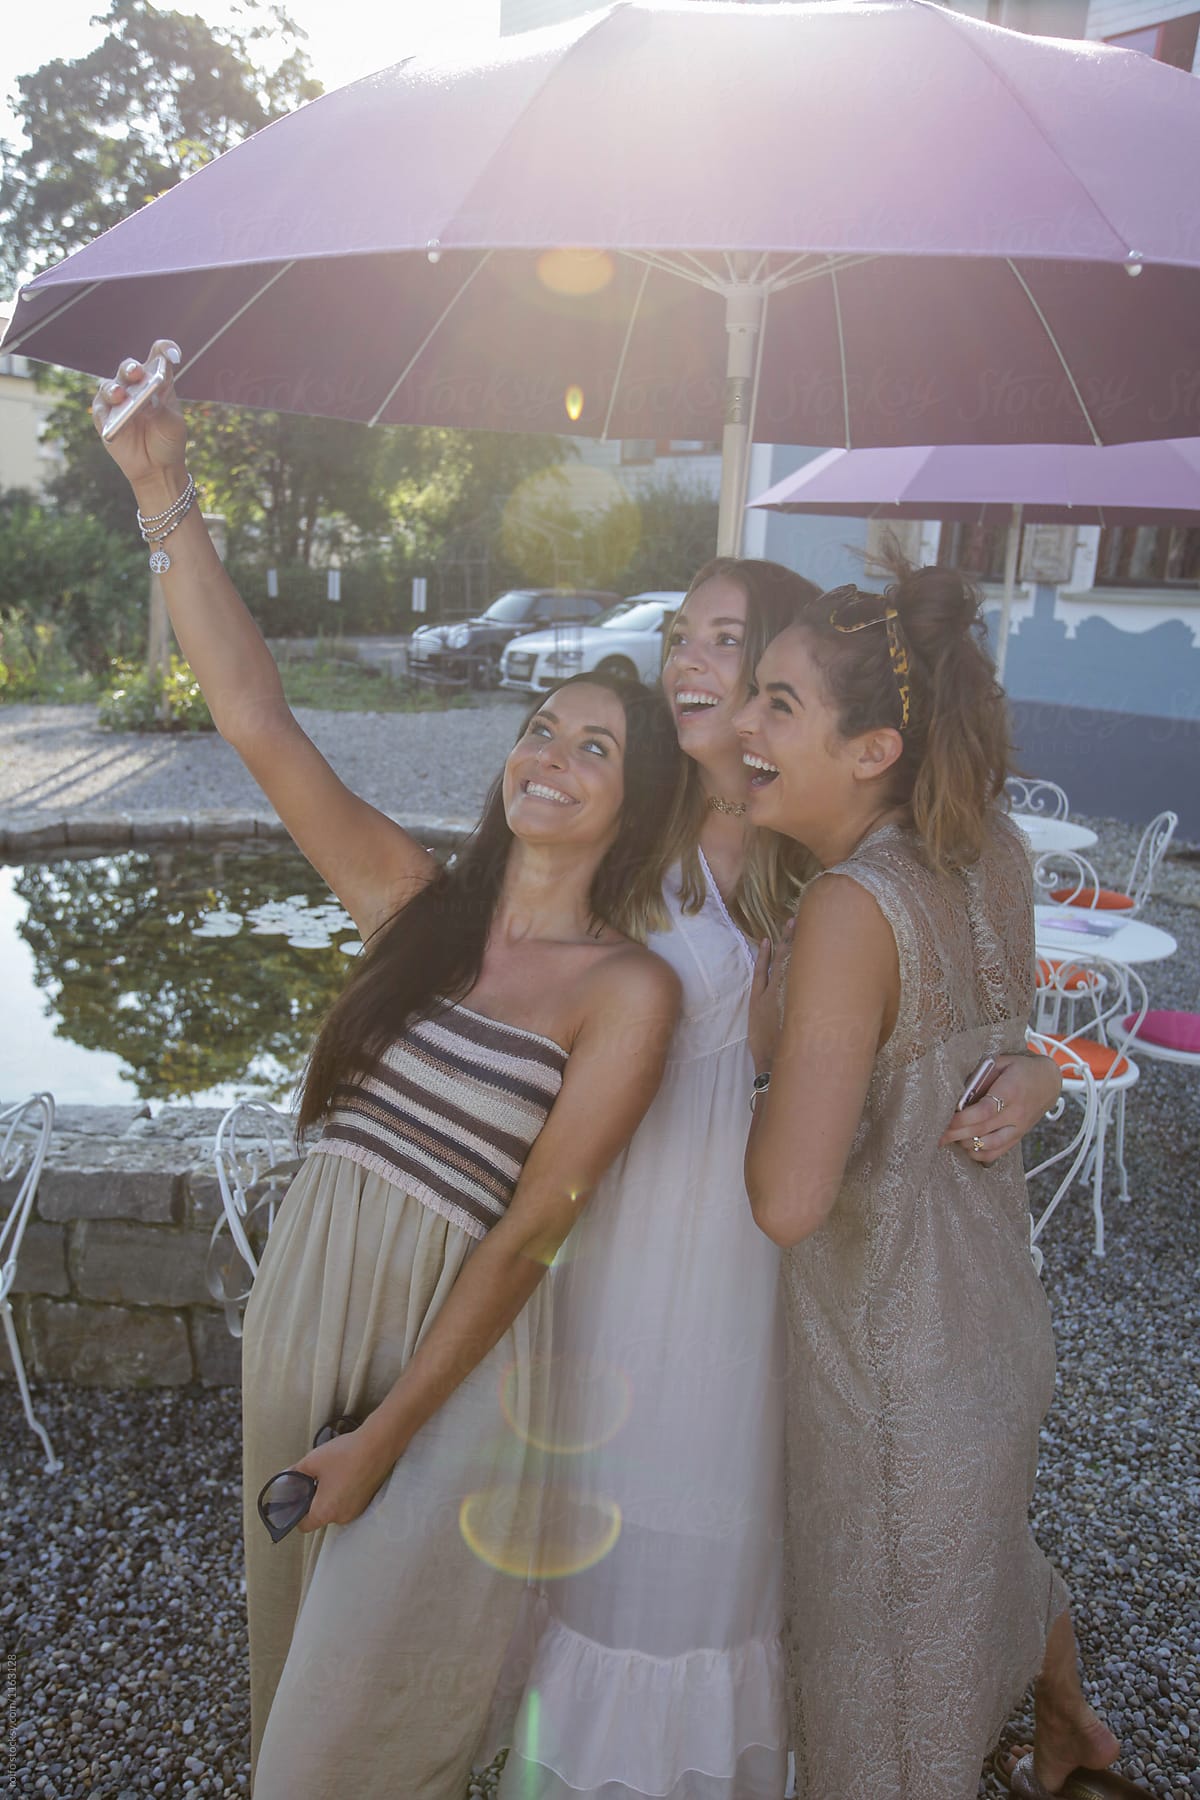 Cheerful girls taking selfie via phone in outdoor cafe